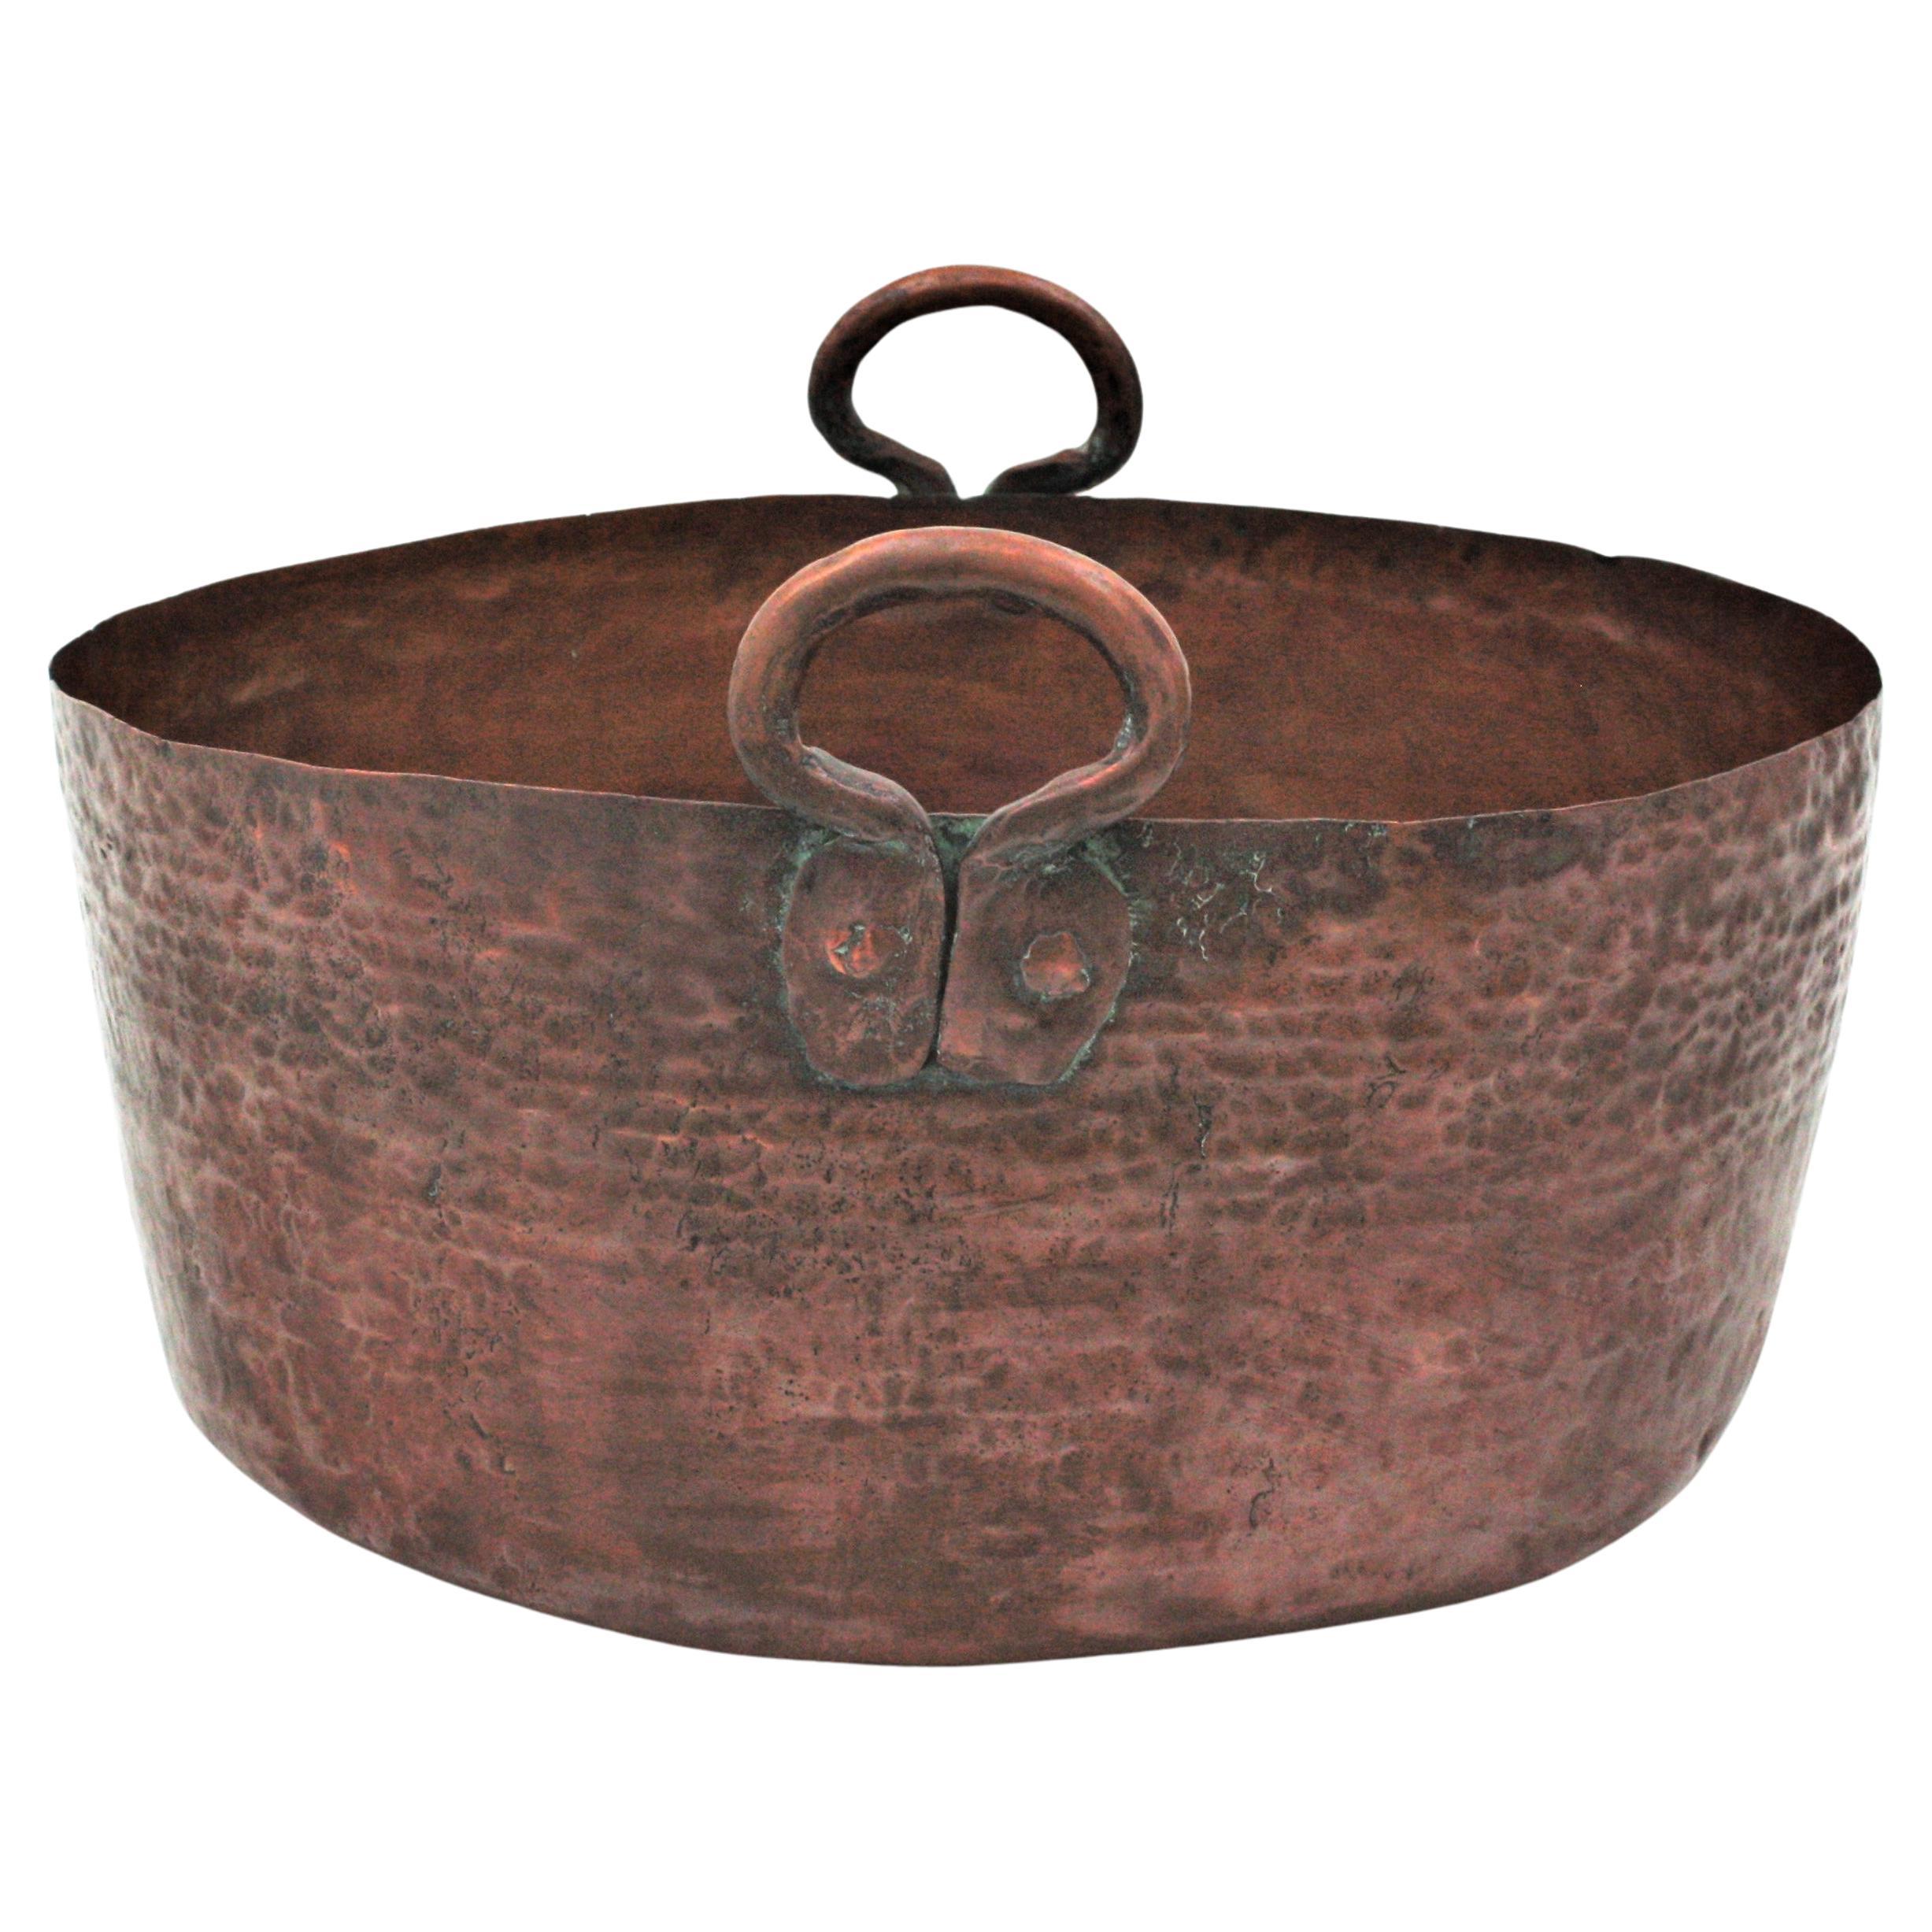 Massive Spanish Copper Cauldron with Handles